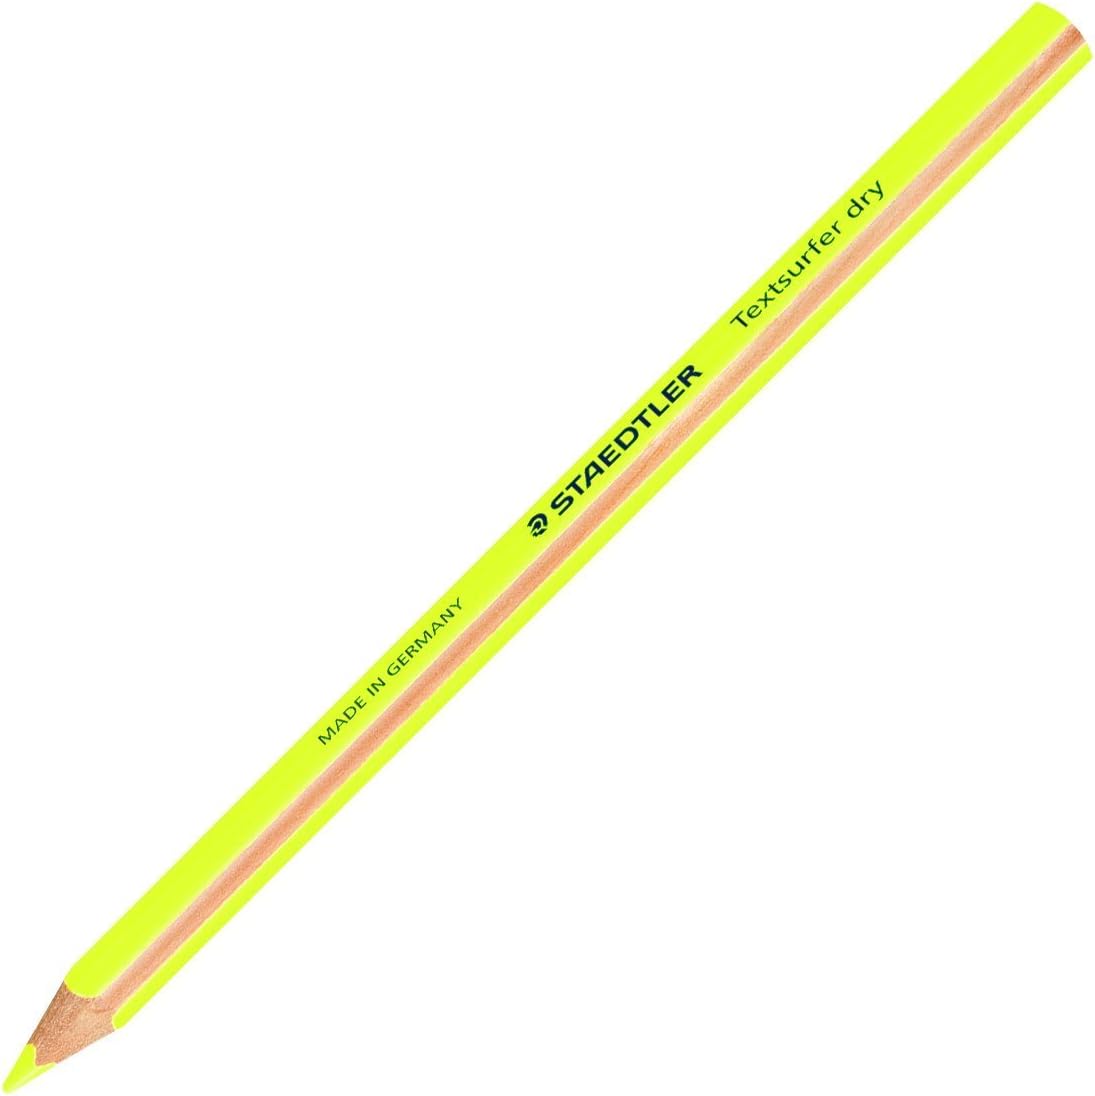 Evidenziatore a matita textsurfer dry giallo